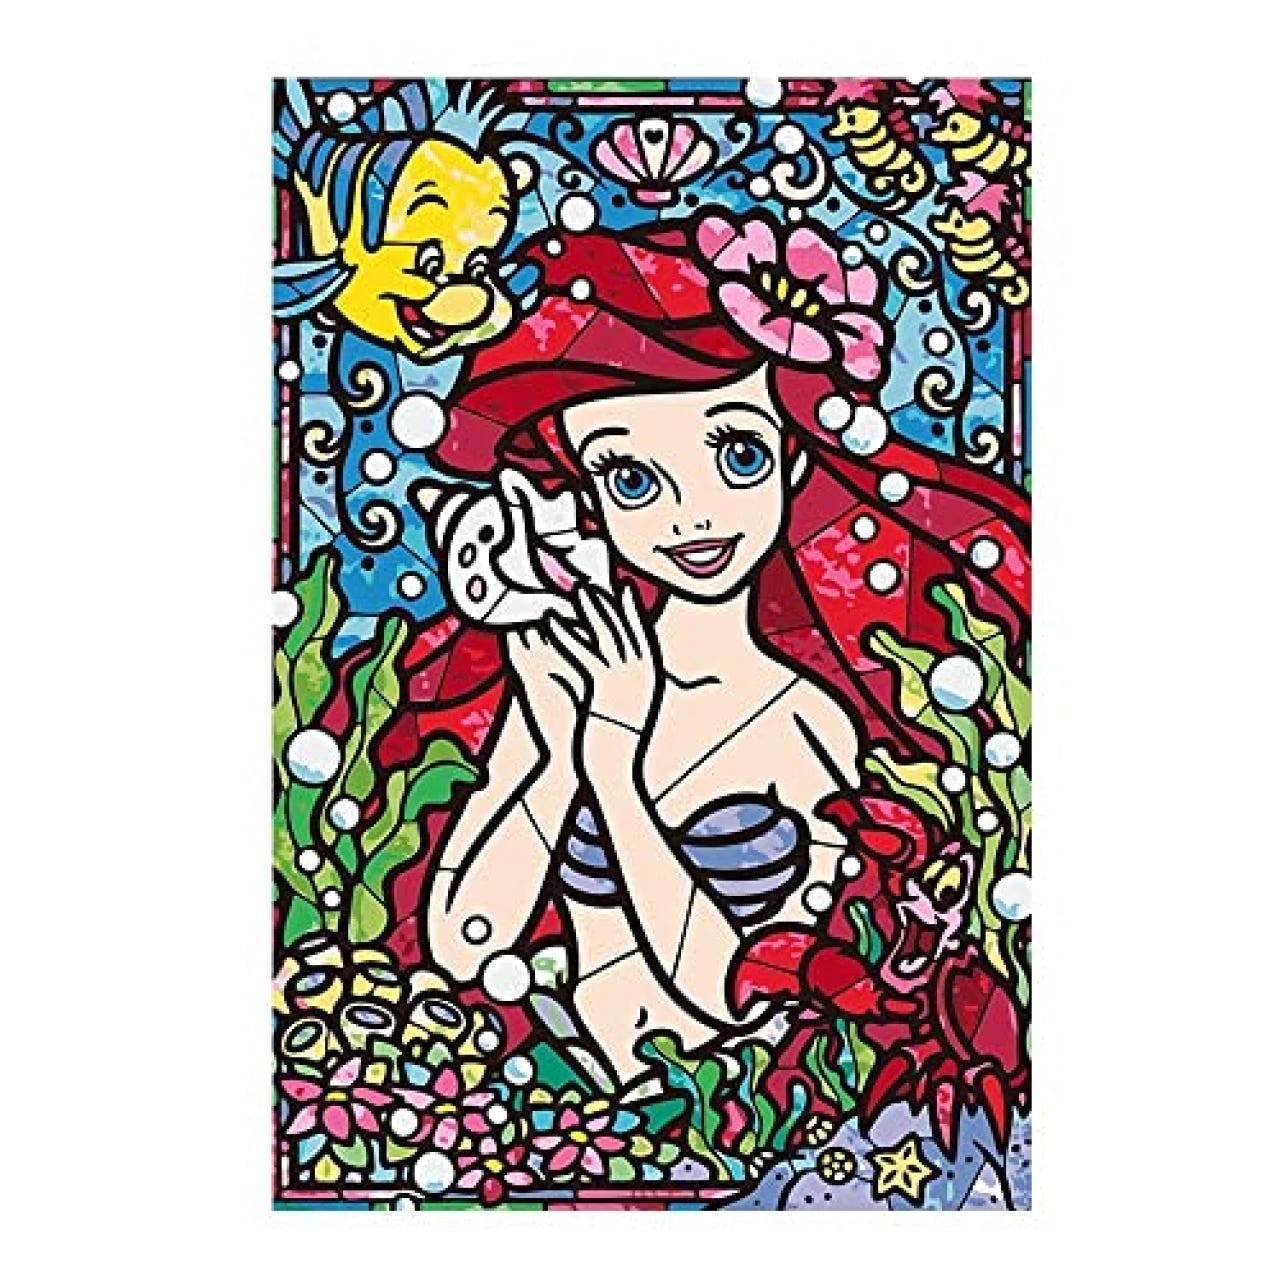  Diamond Art Anime Decade DIY 5D Diamond Painting Full Drill  Cross Stitch Kit Mosaic Rhinestone Home Wall Decor 12x16-Round : Hobbies